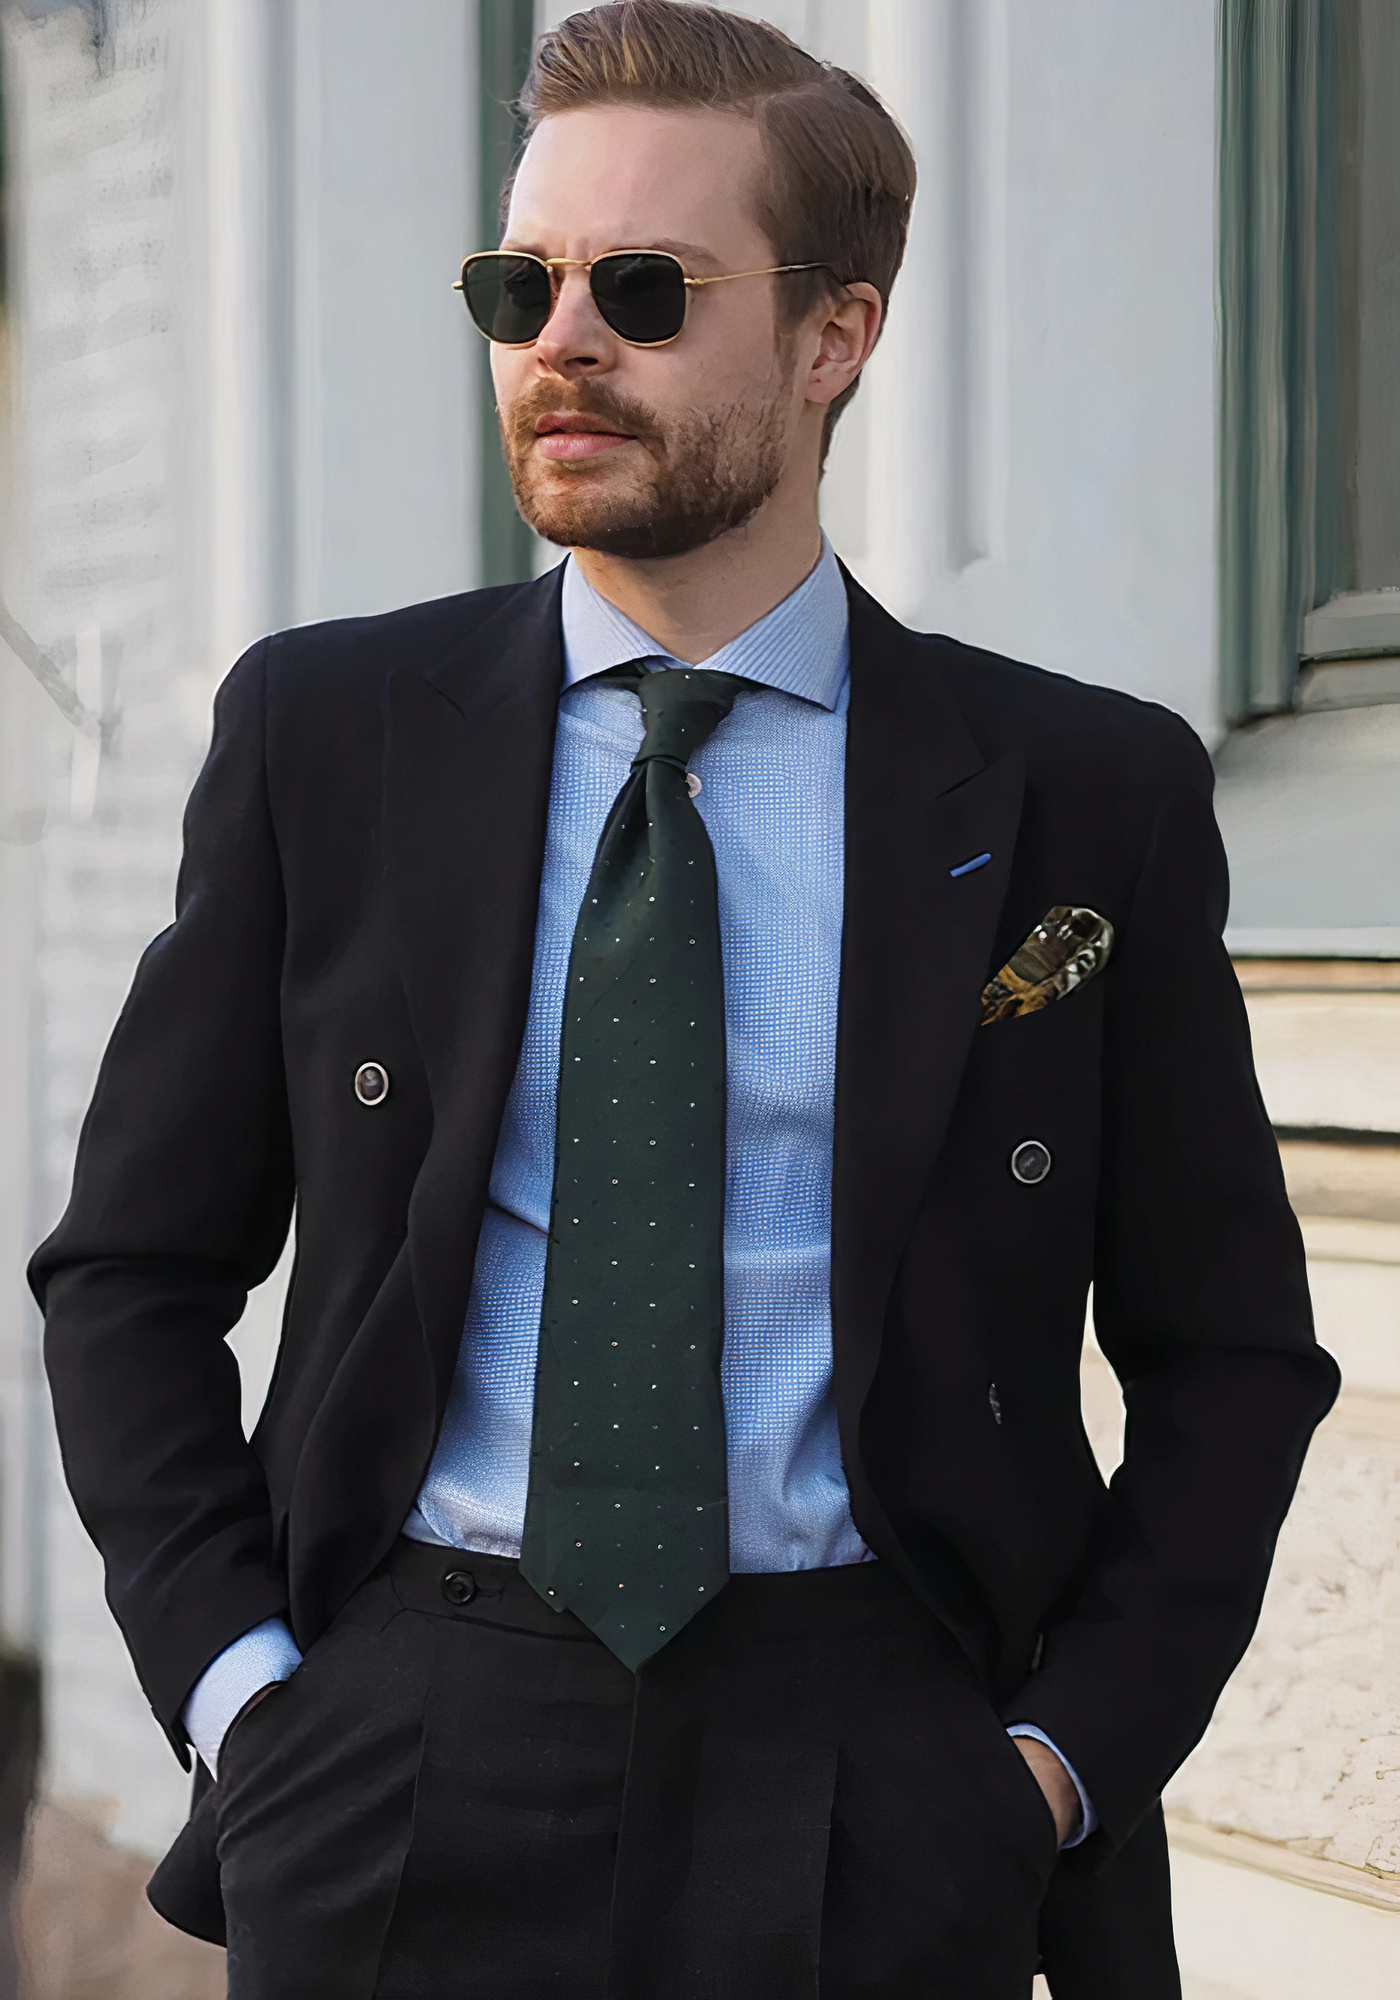 Black suit, blue dress shirt, and green polka dot tie